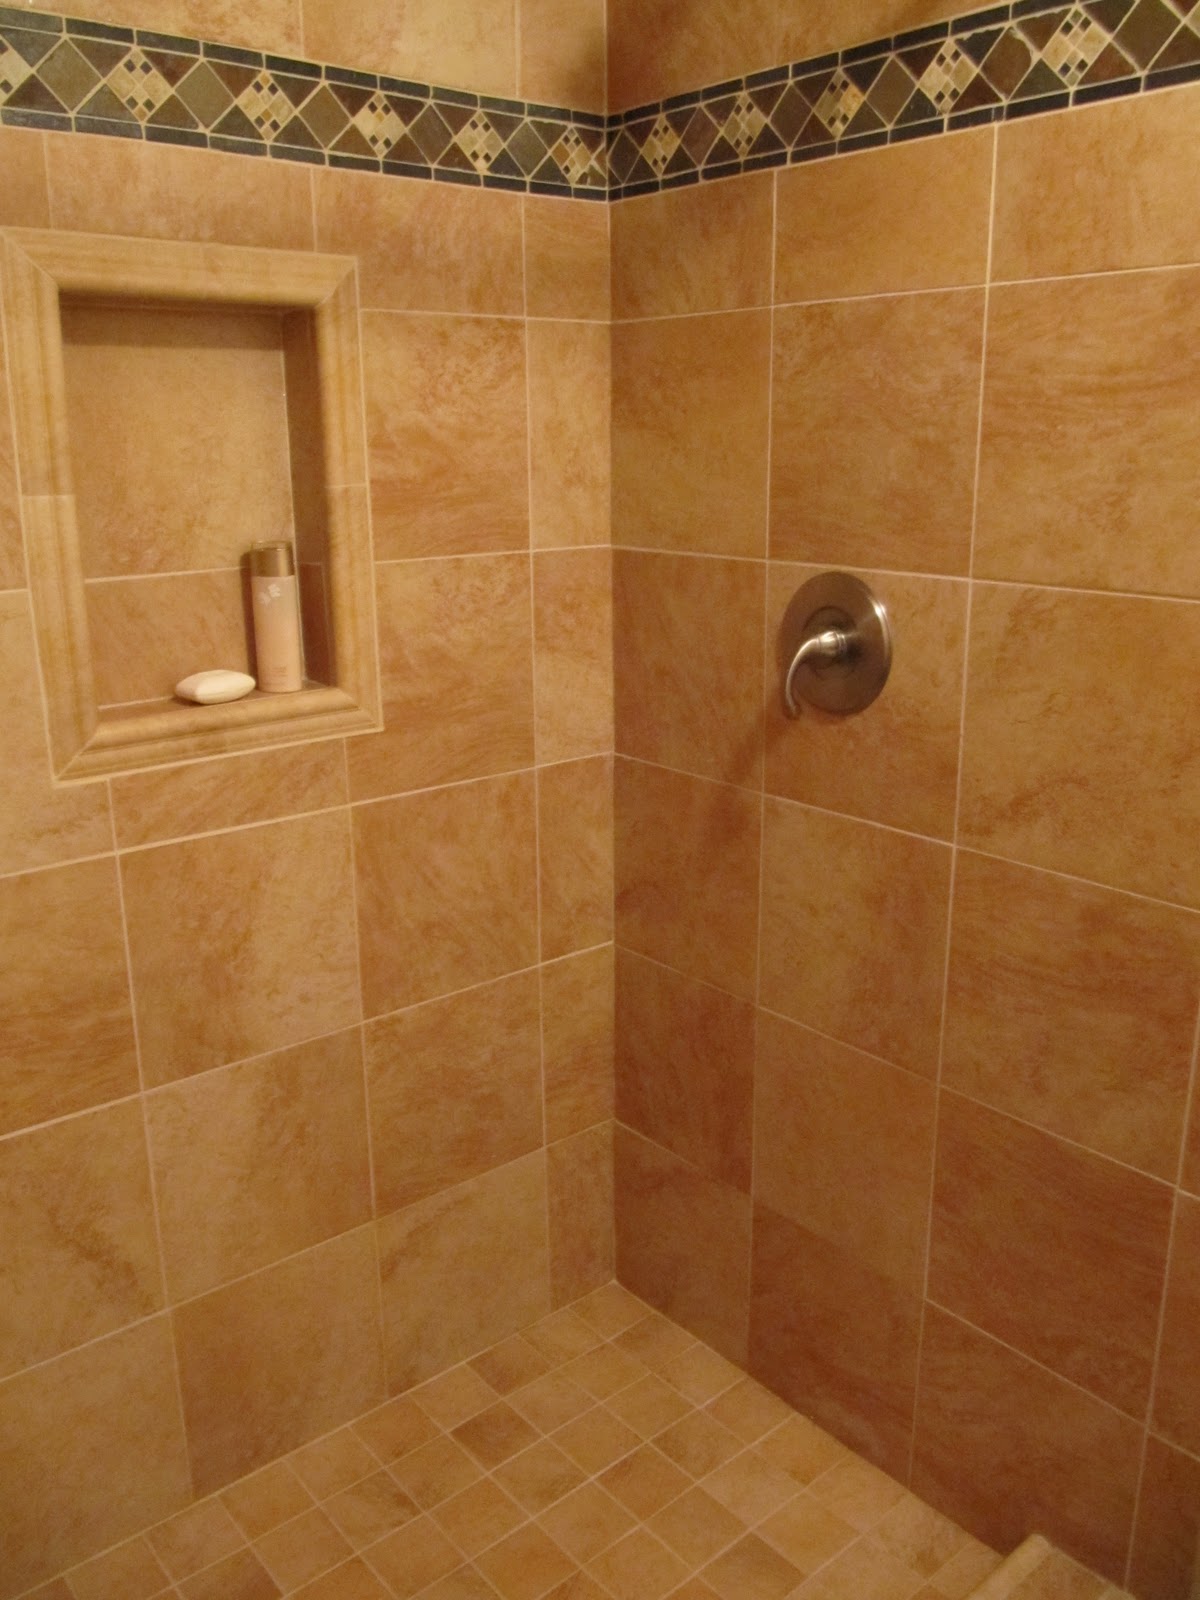 bathroom shower makeovers Shower Remodel - remove old shower enclosure and build new shower 